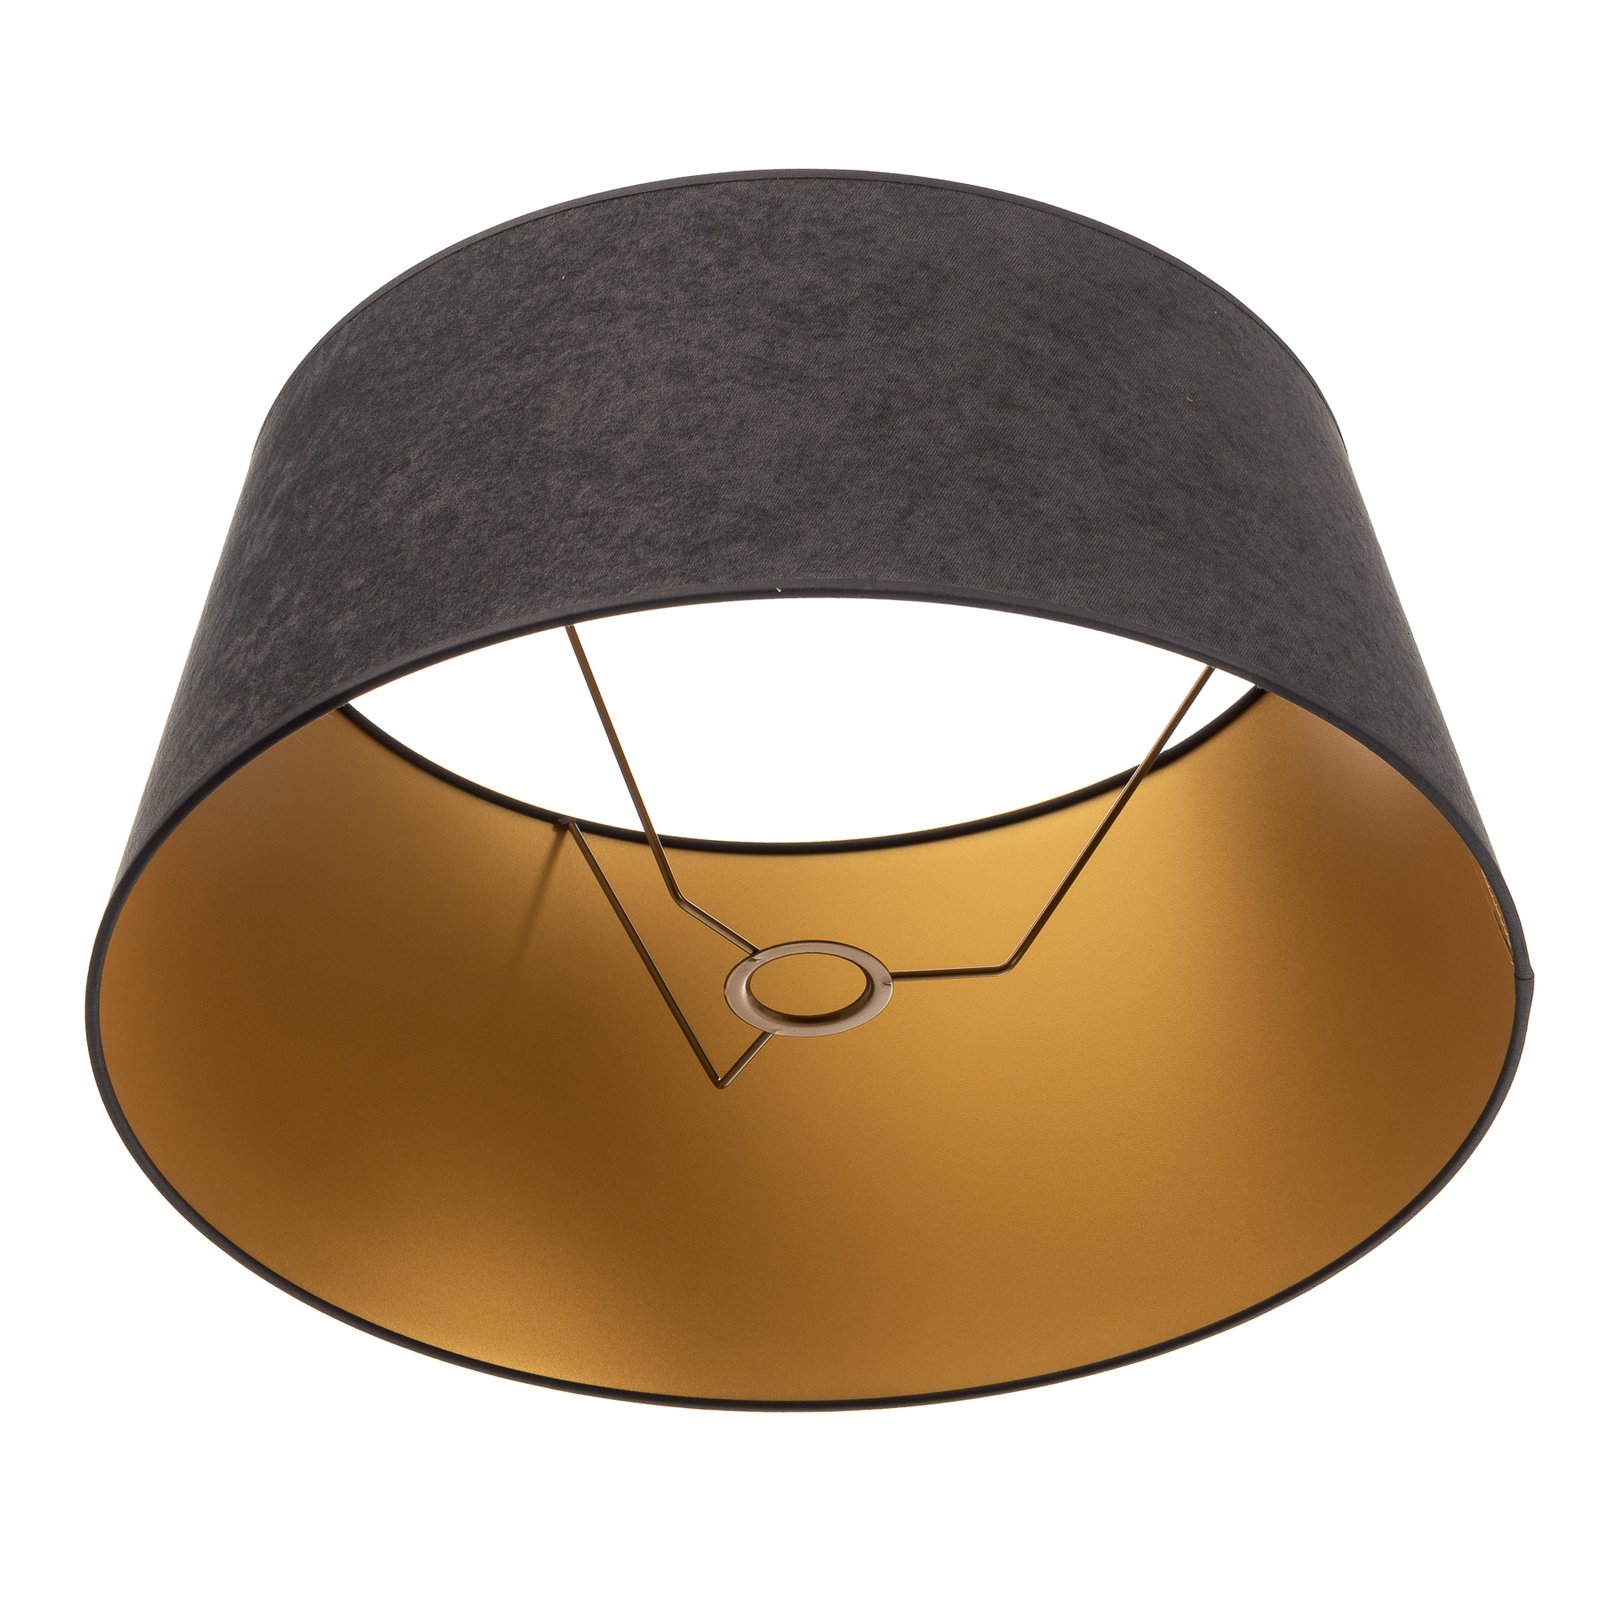 Cone lampskärm höjd 25,5 cm, grafit/guld